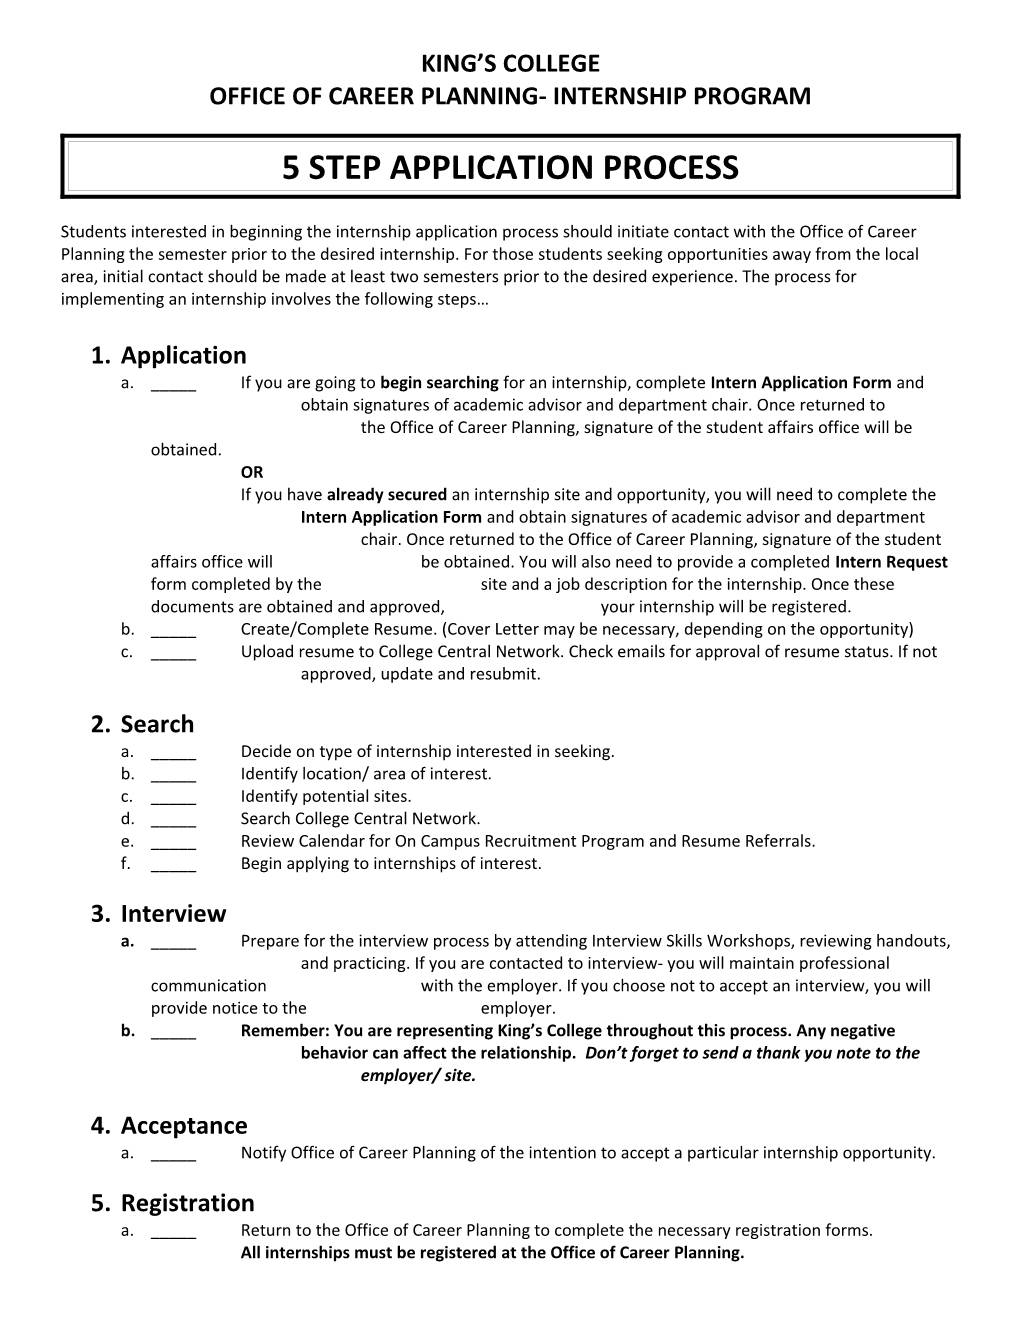 The Internship Application Process